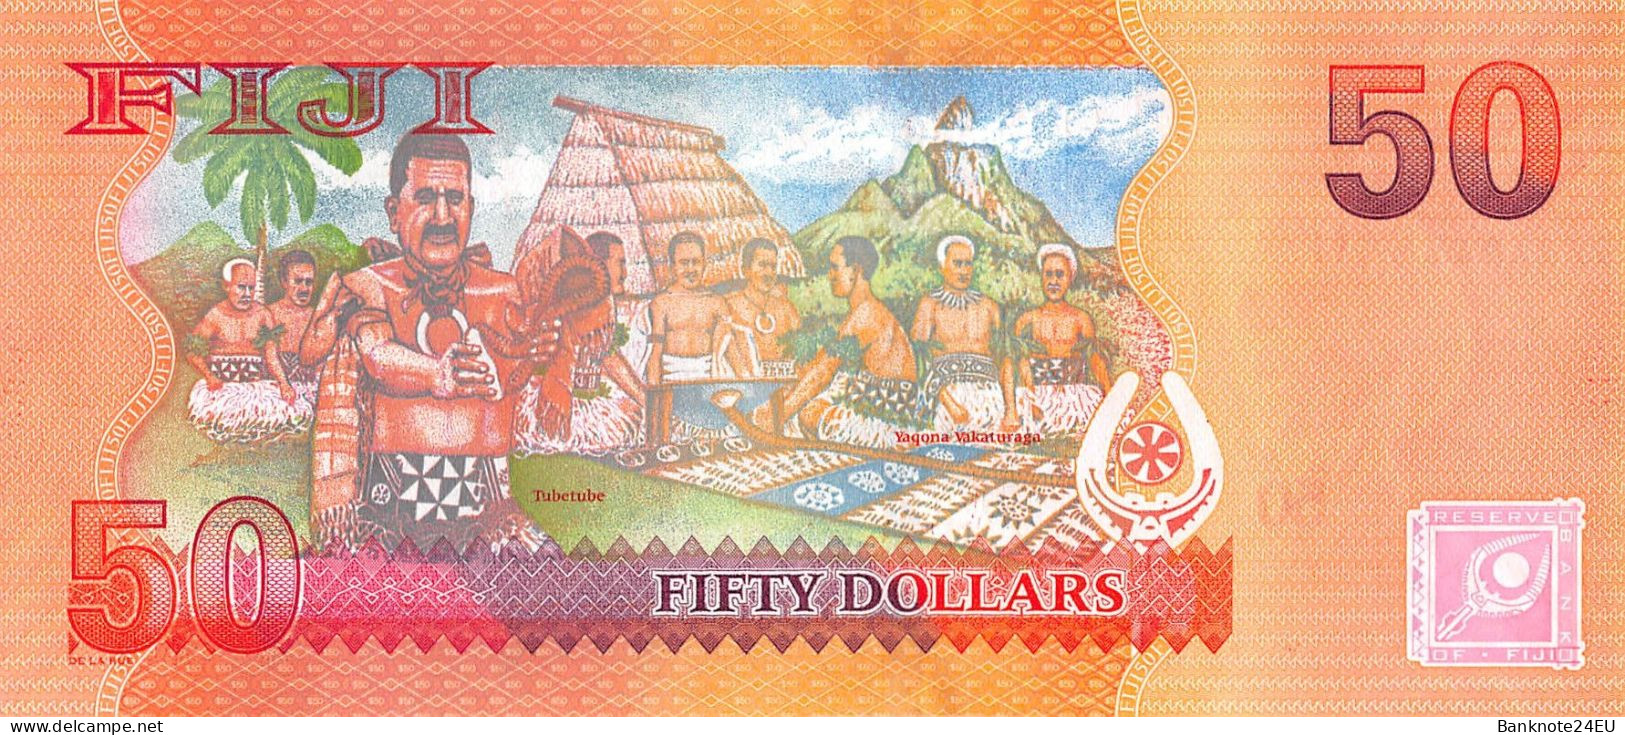 Fiji Islands 50 Dollars 2012 Unc Pn 118a, Banknote24 - Figi